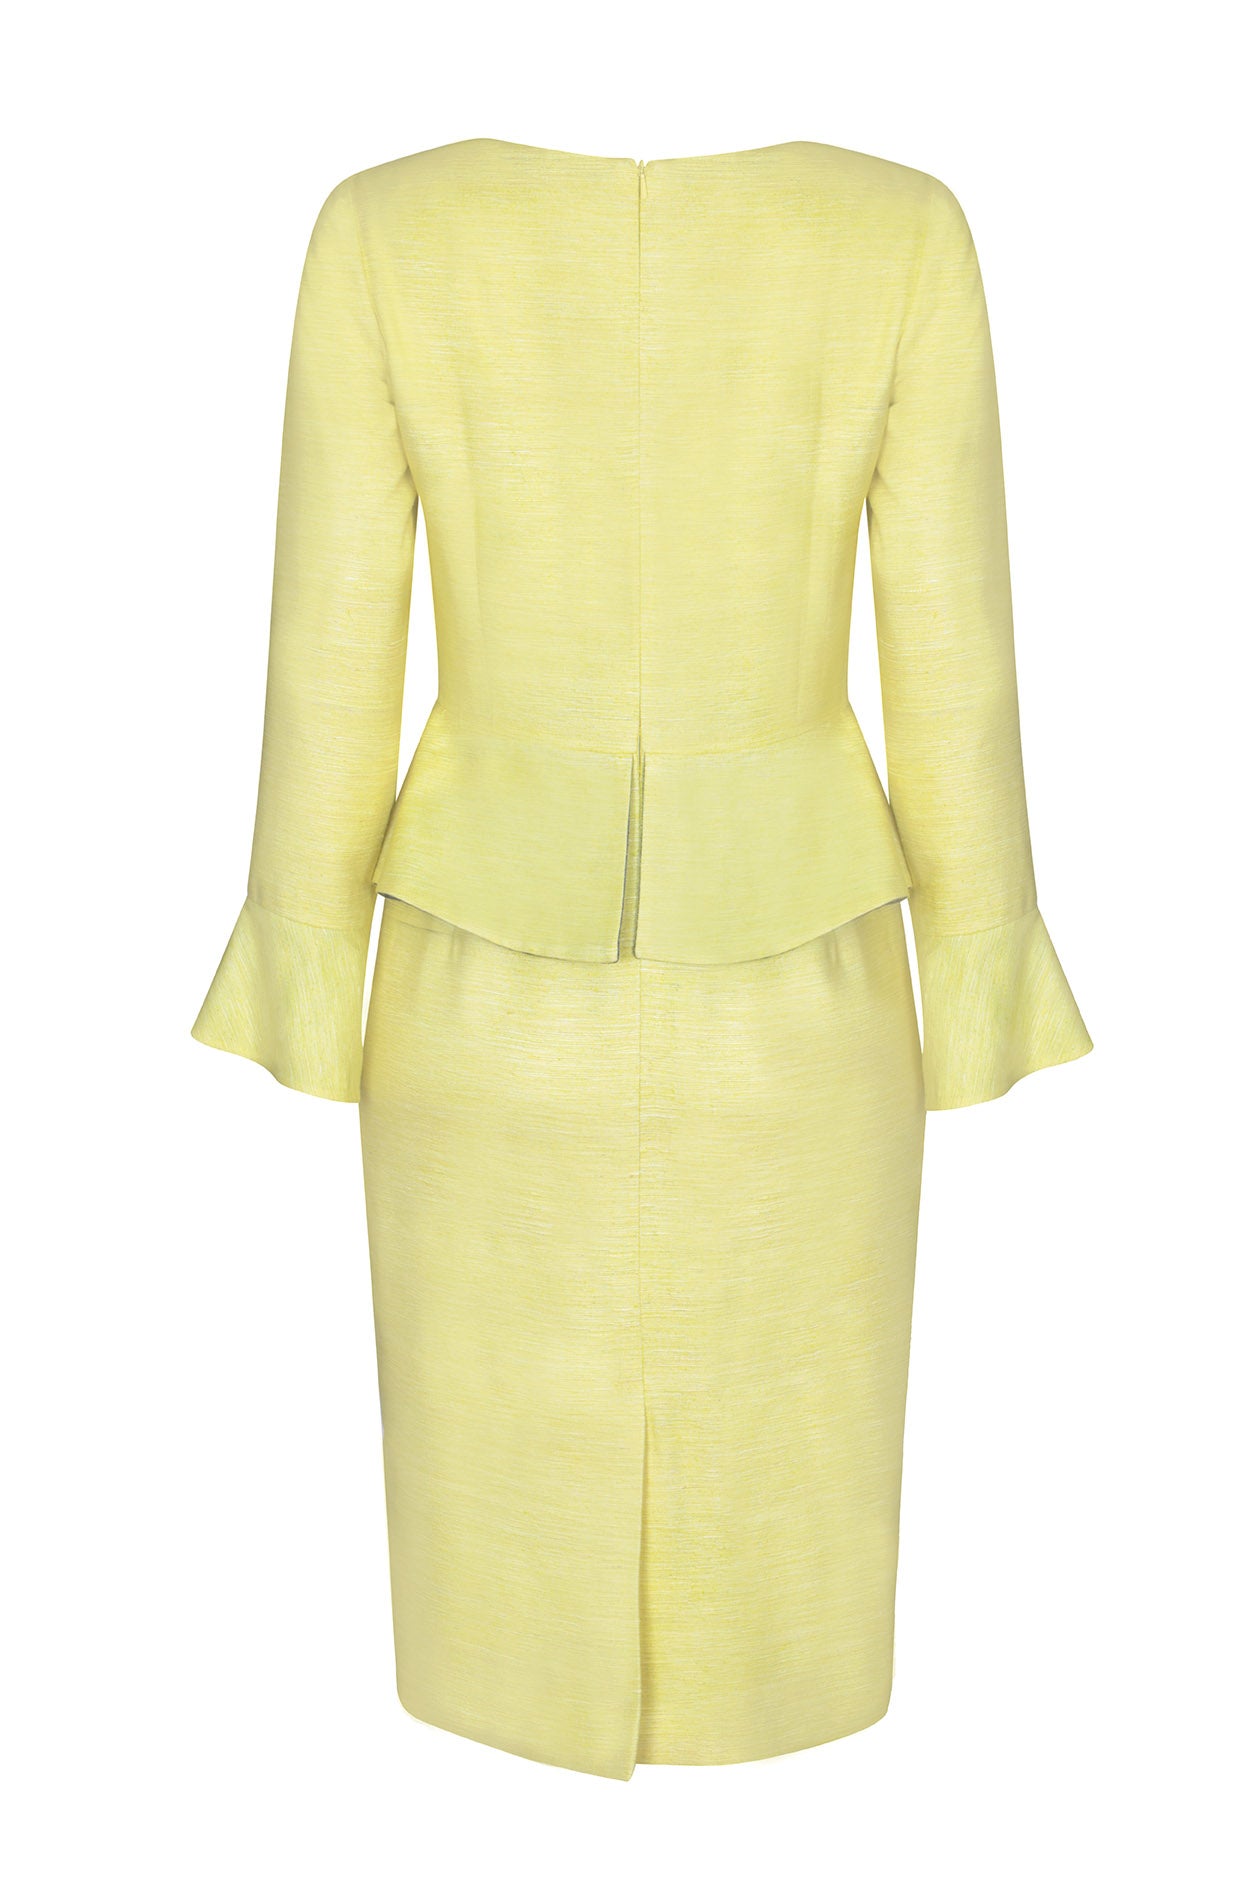 Lemon Yellow Raw Silk Peplum Dress with Fluted Cuffs - Catherine